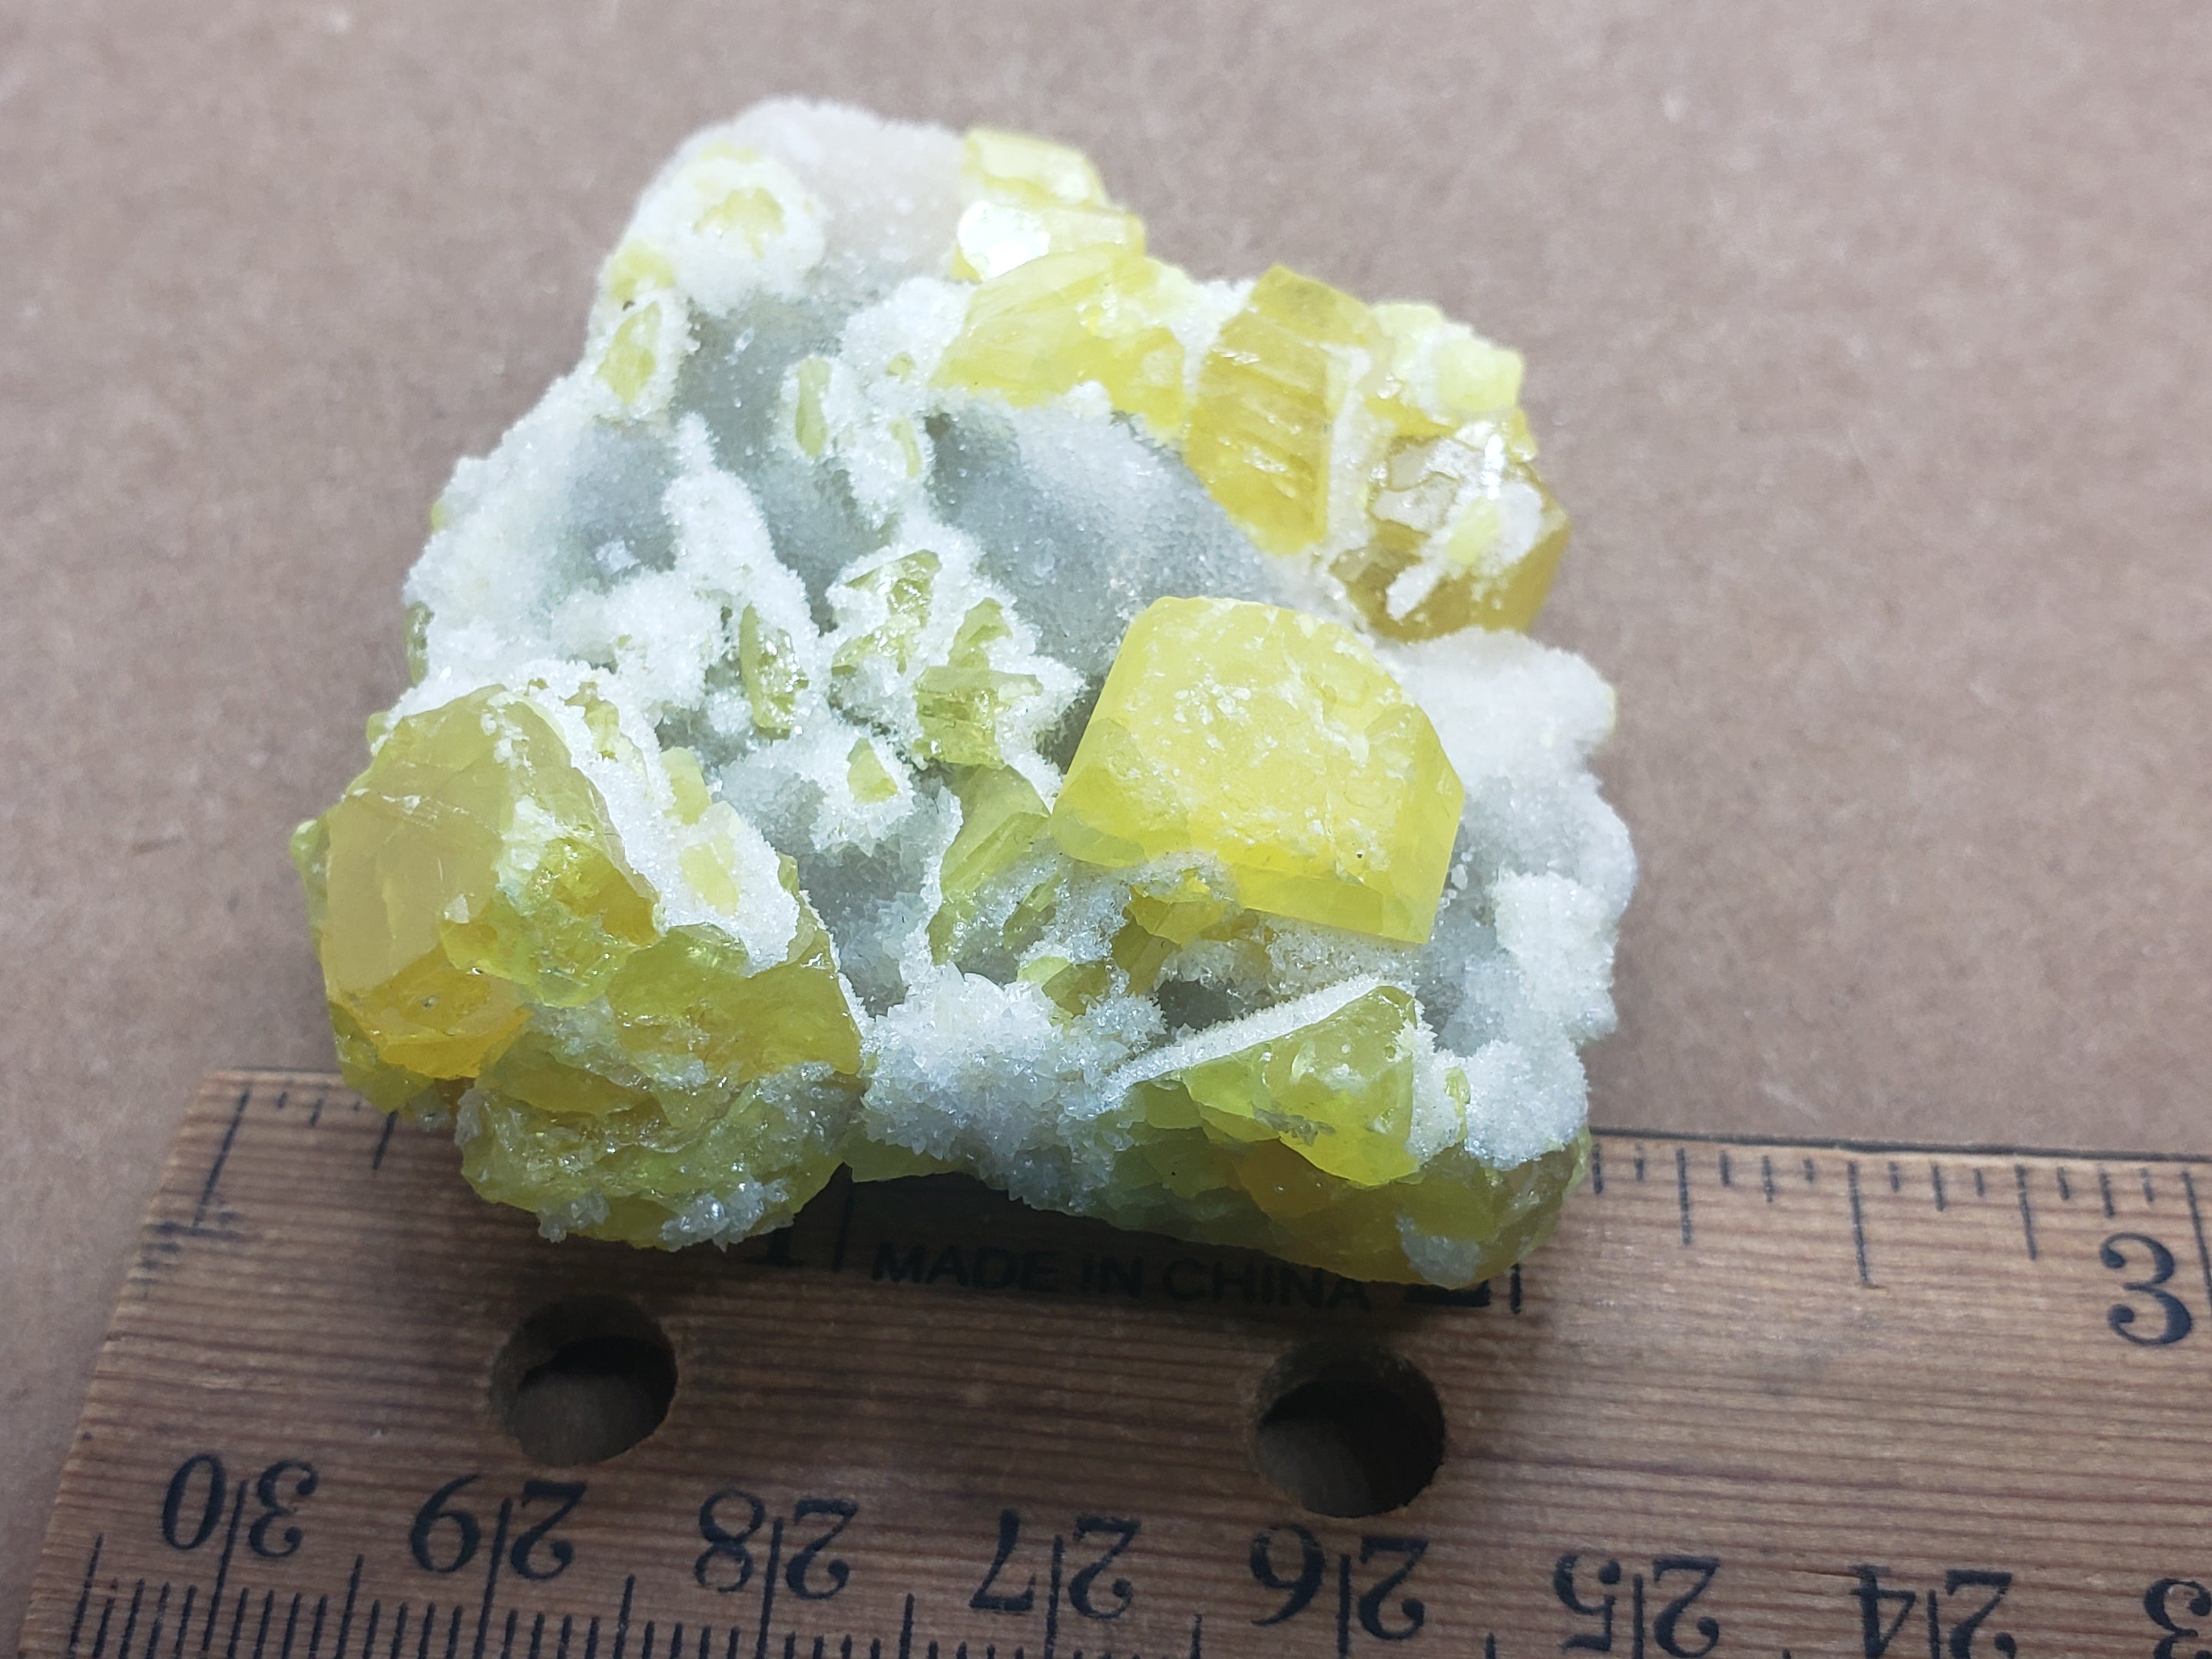 Sulphur (sulfur) Crystals on matrix